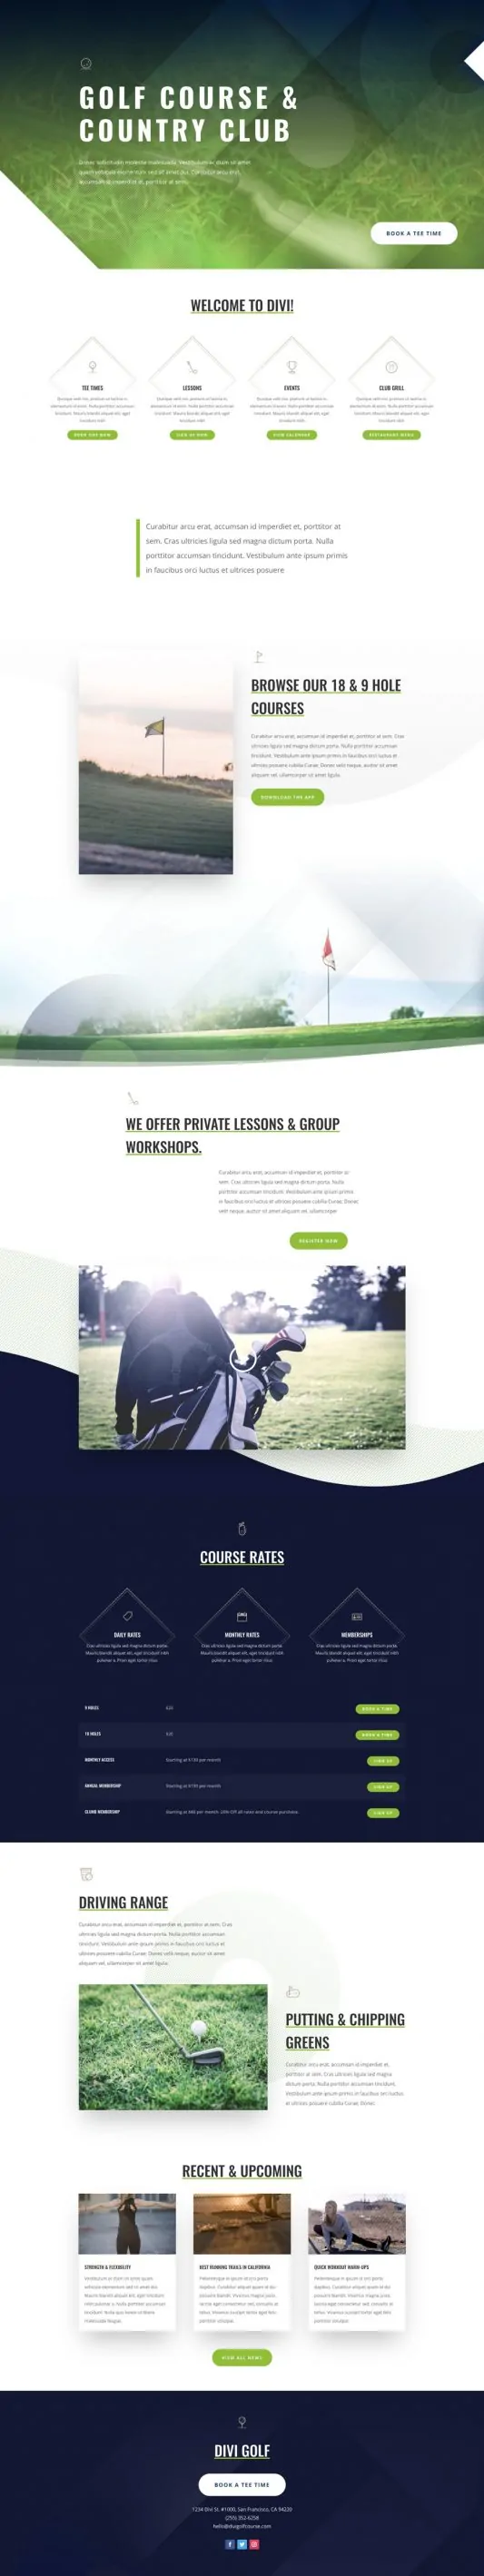 Golf Course Web Design 7